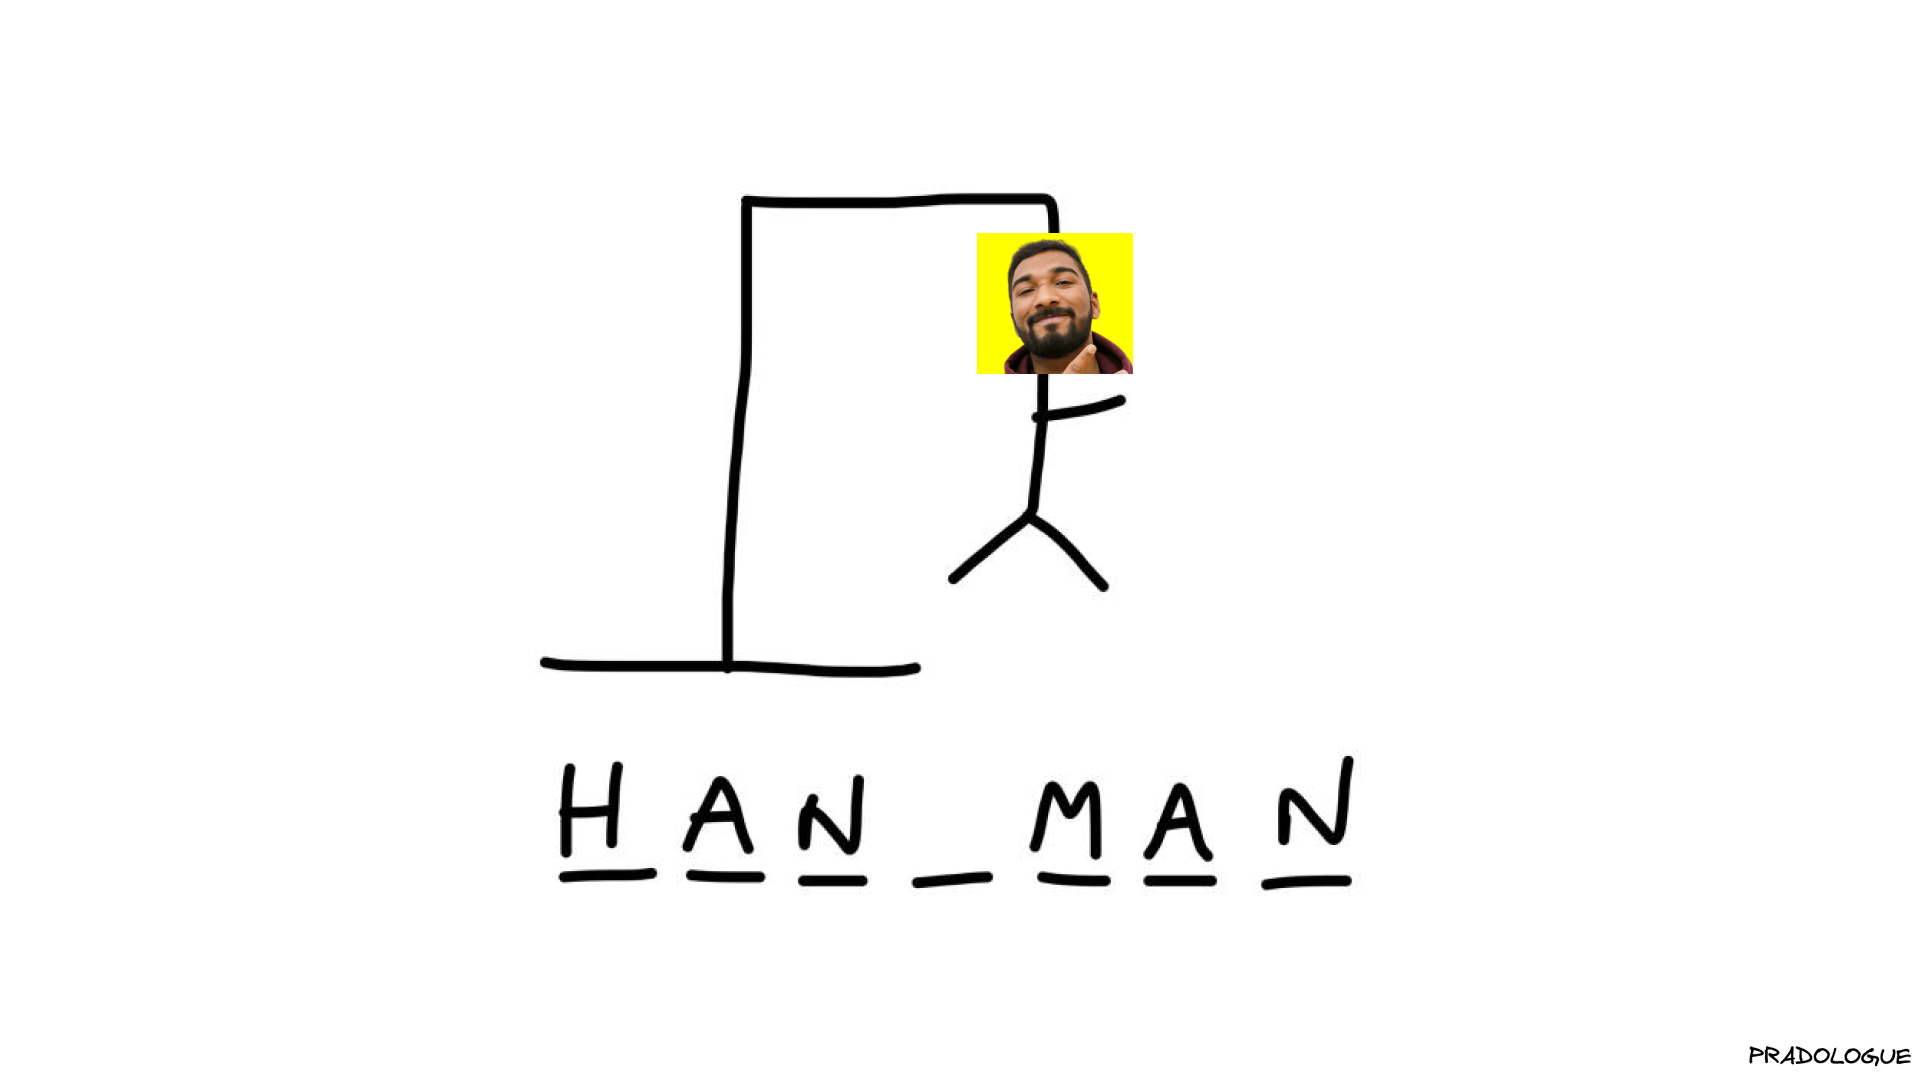 Hangman - by Prado 🔑 - Pradologue Newsletter